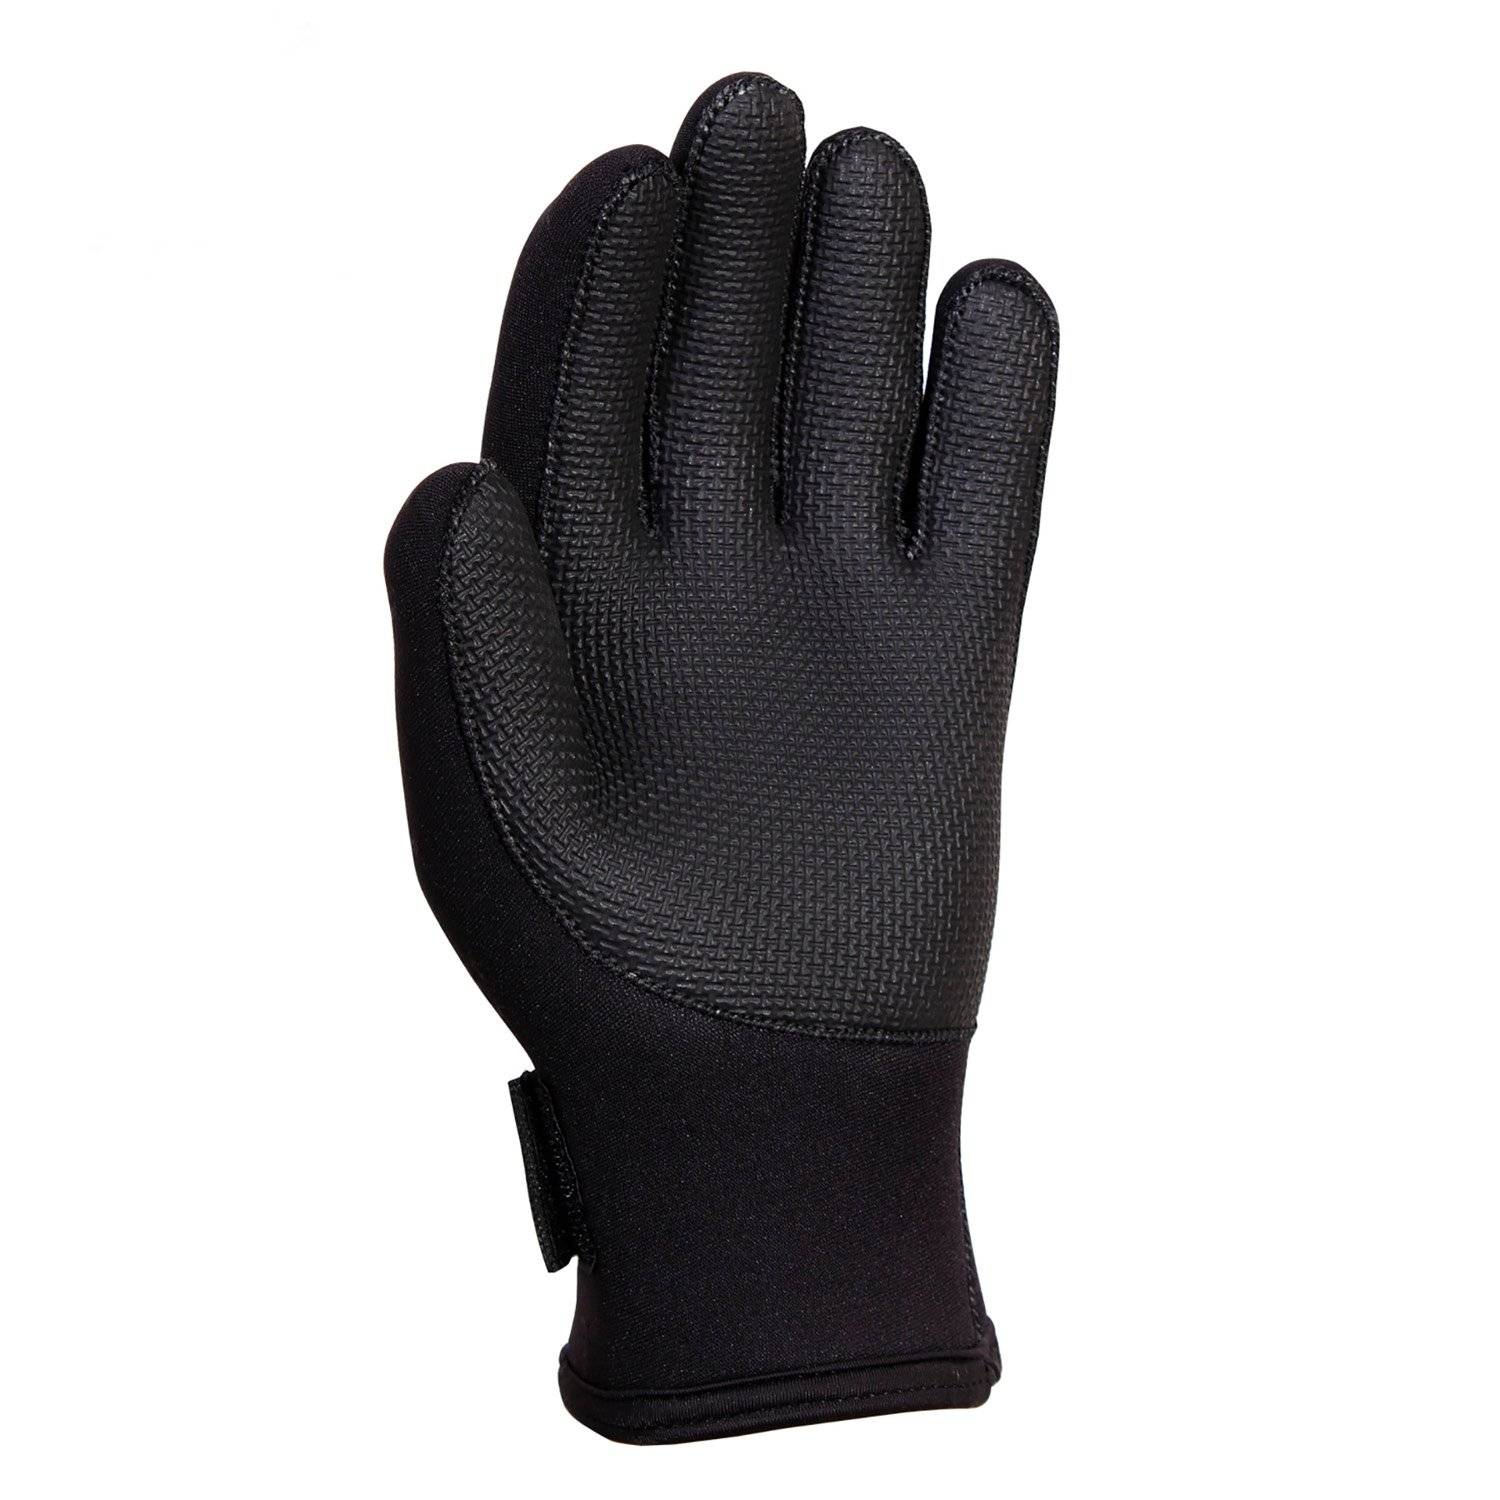 Black Waterproof Multi Purpose Cold Weather Neoprene Rubber Shooting Gloves 